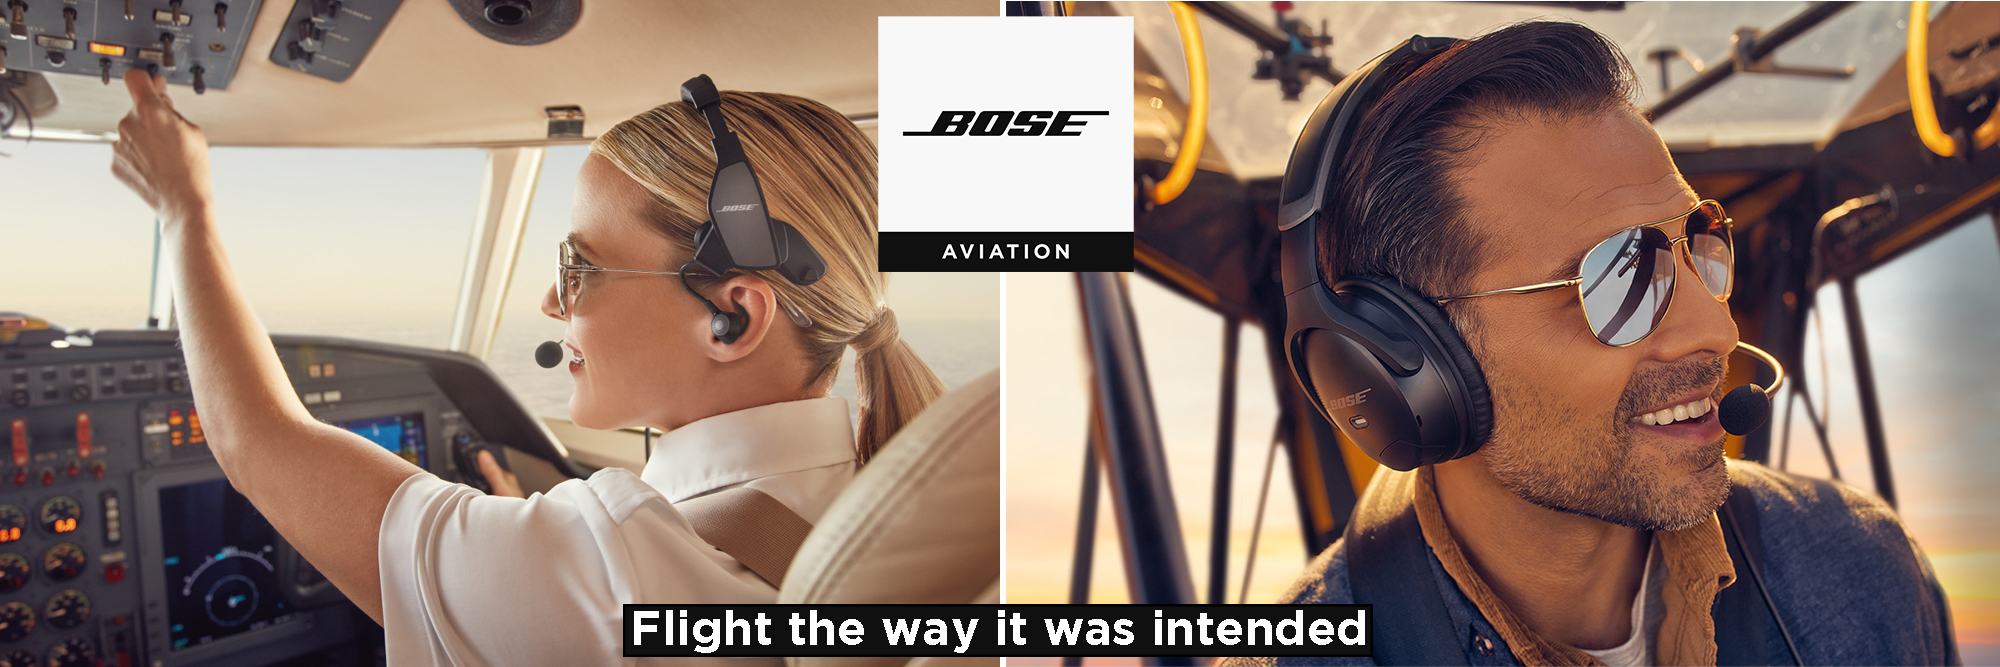 Bose Aviation Headsets crop.jpg